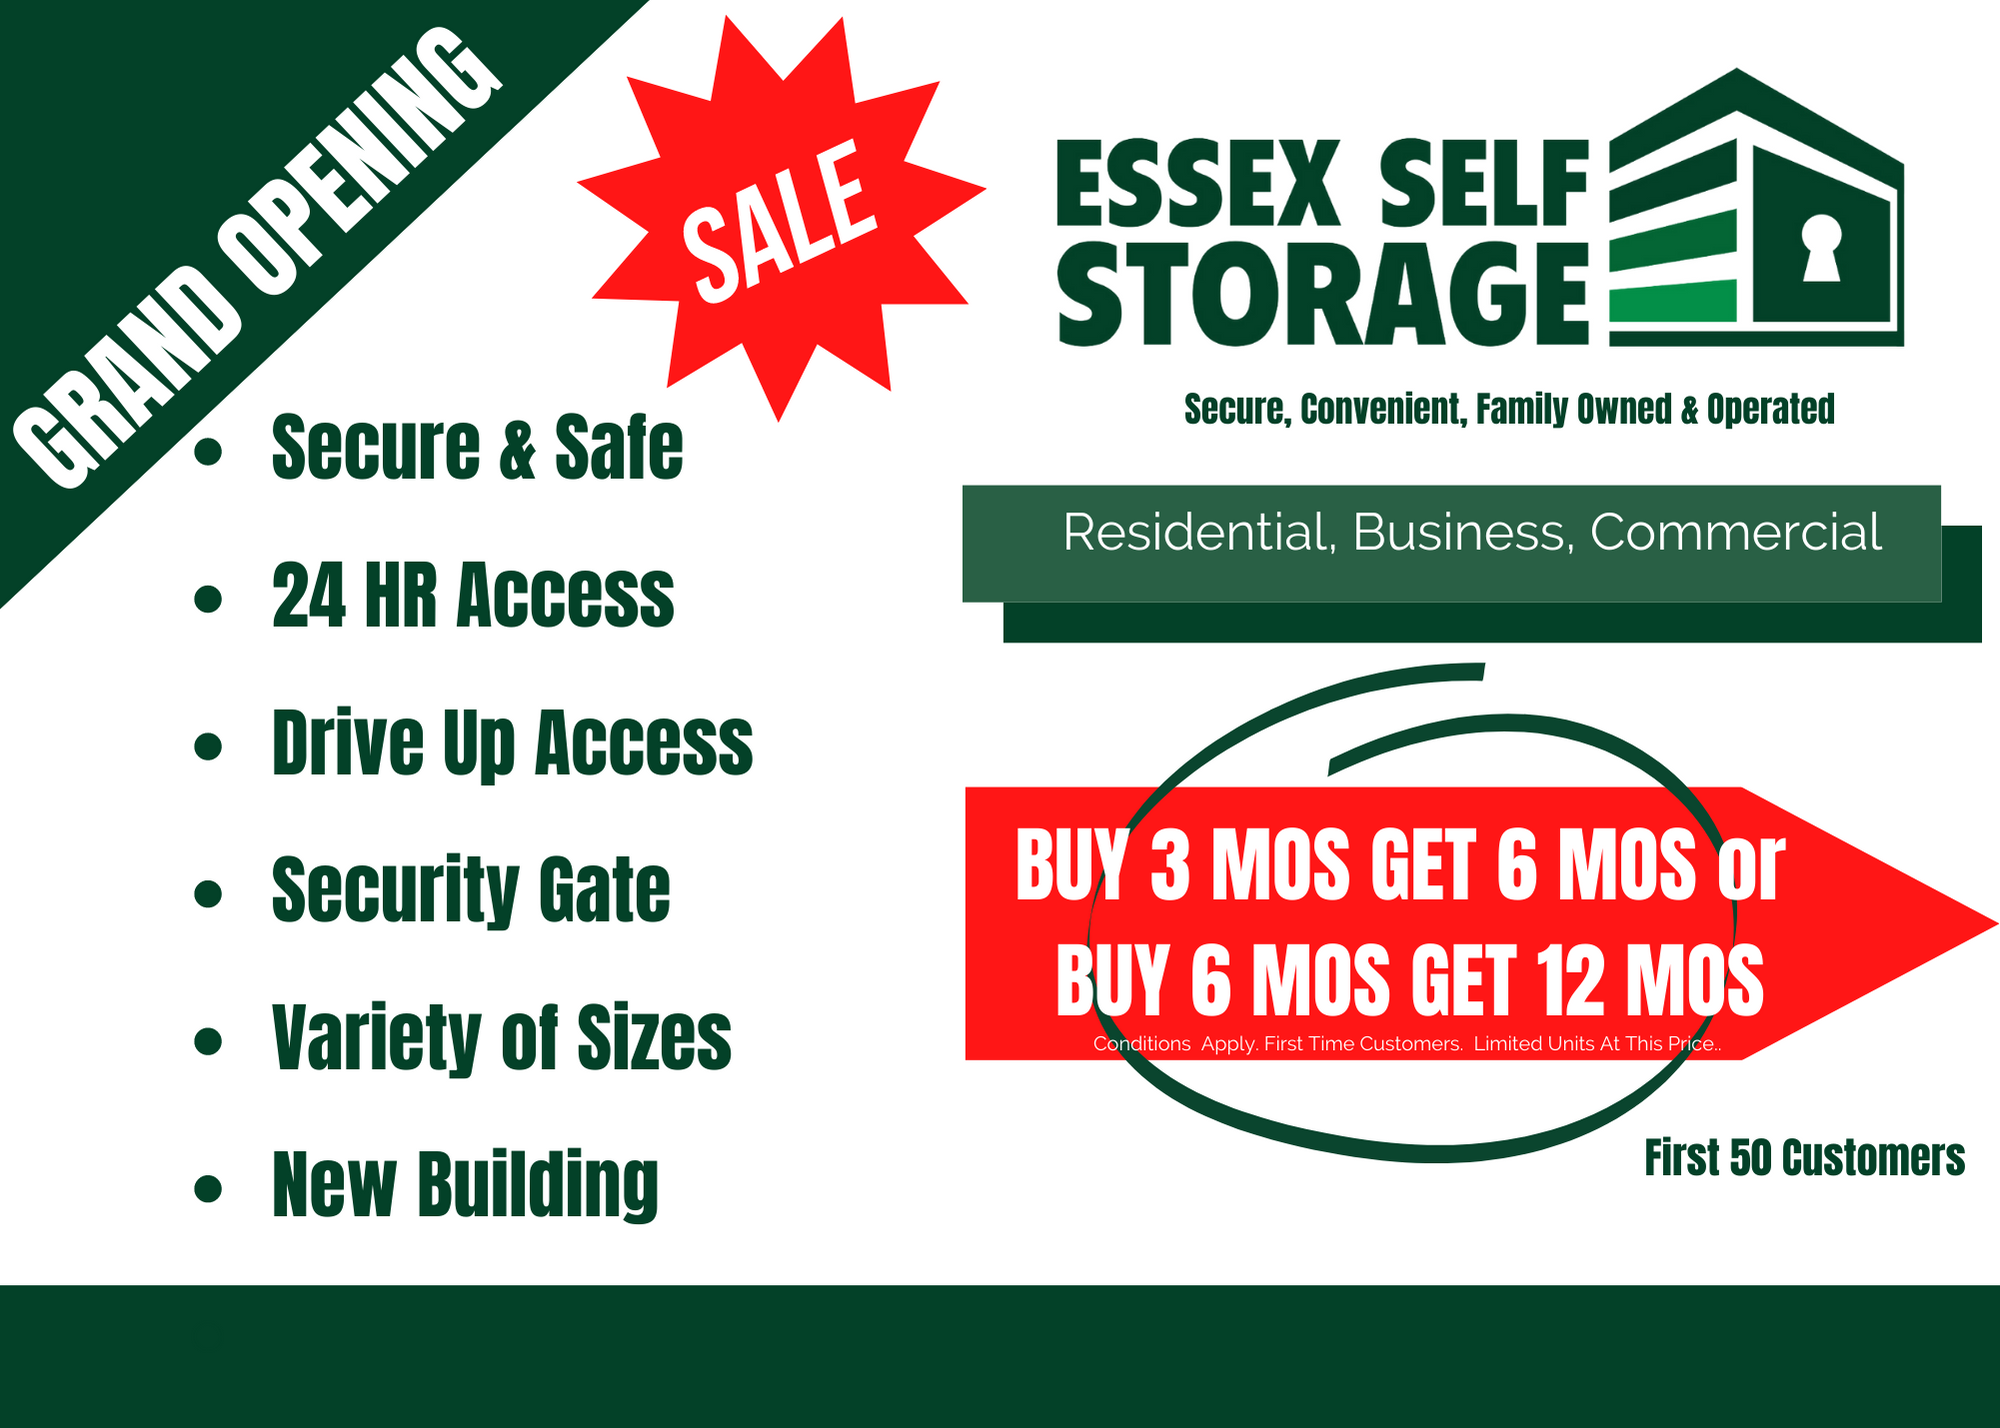 Essex Self Storage Info